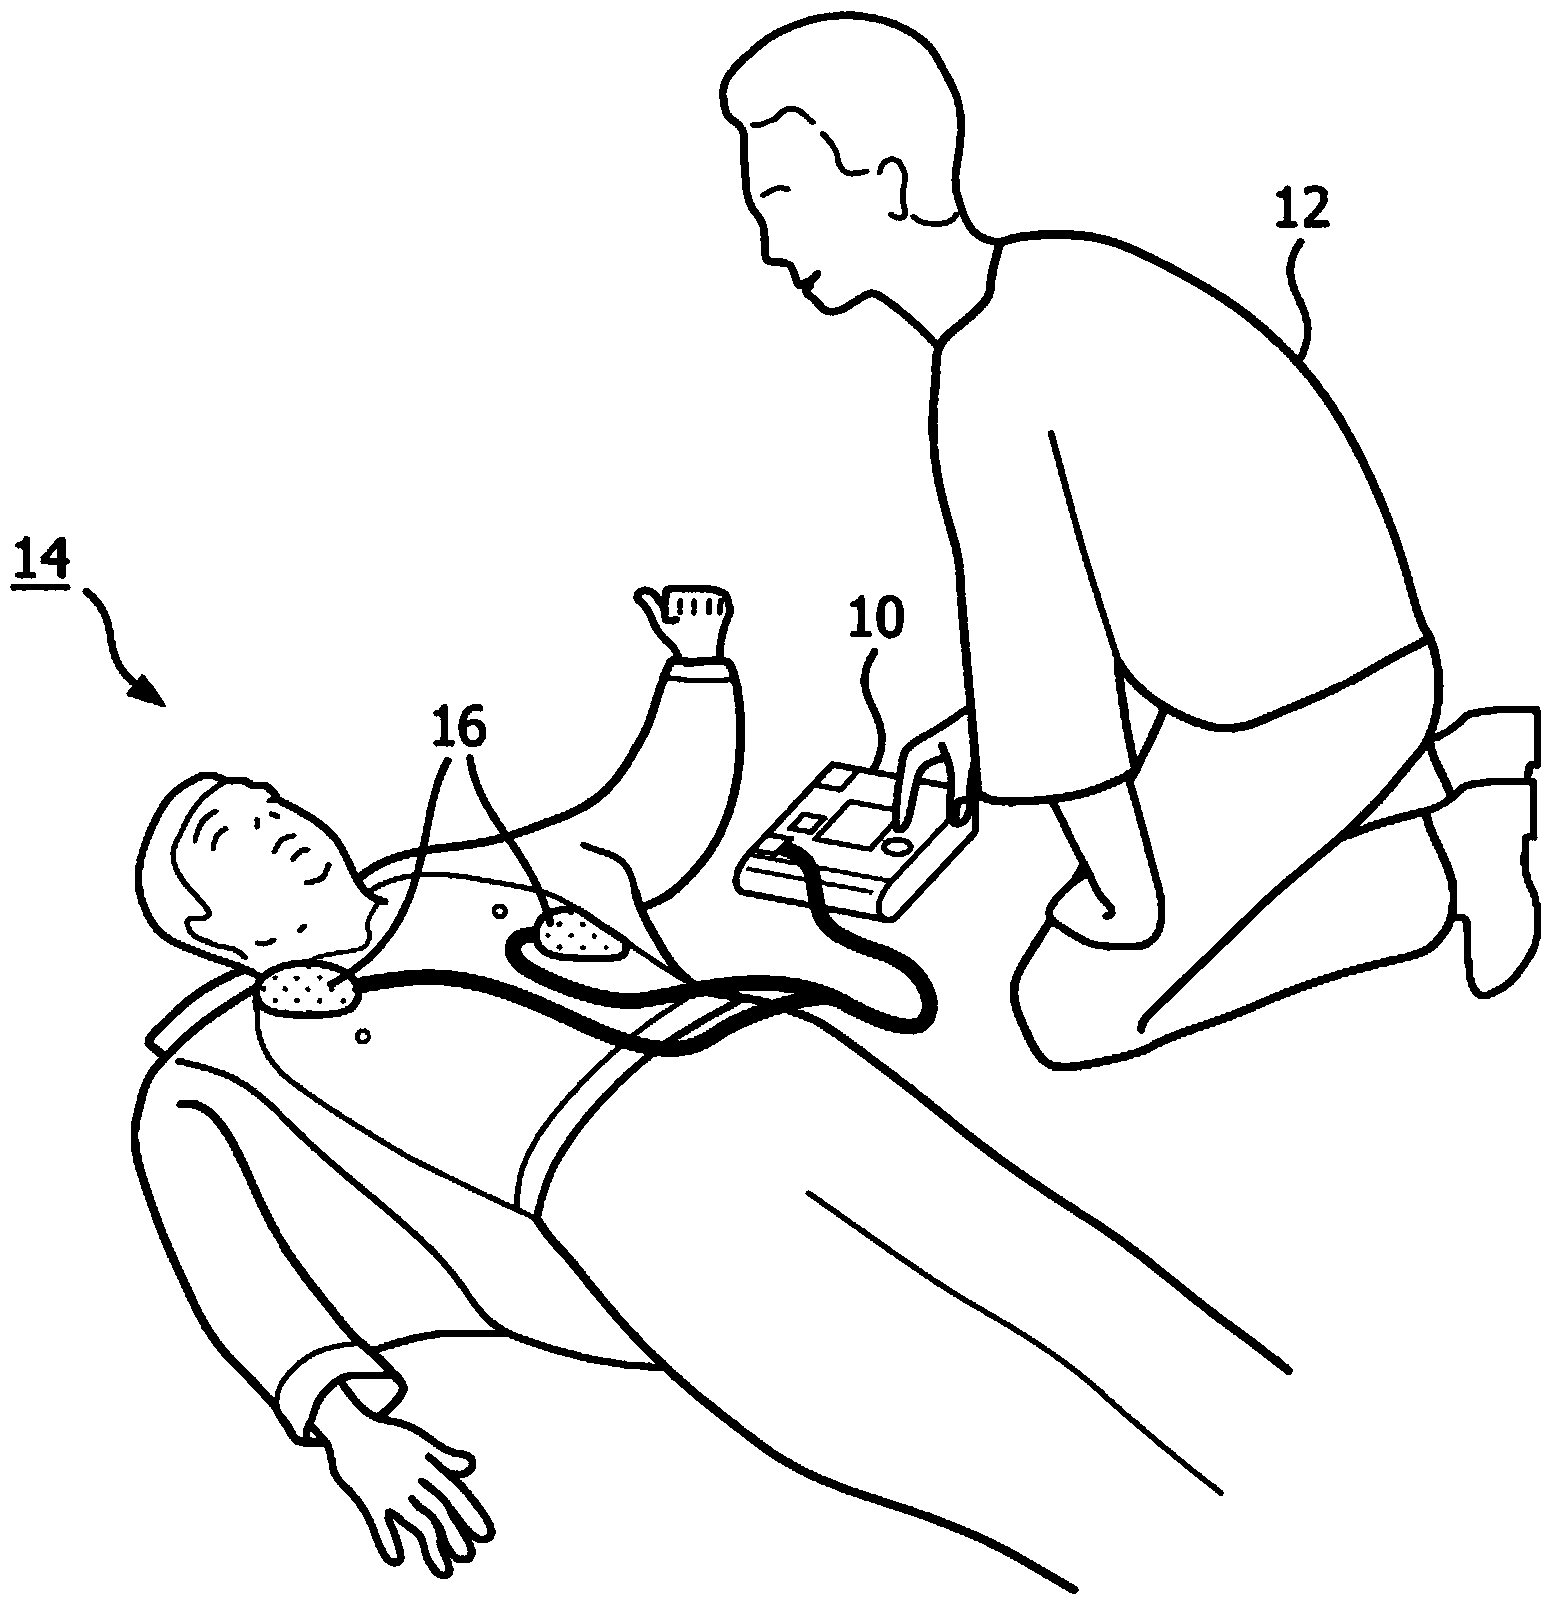 Universal AED training adapter